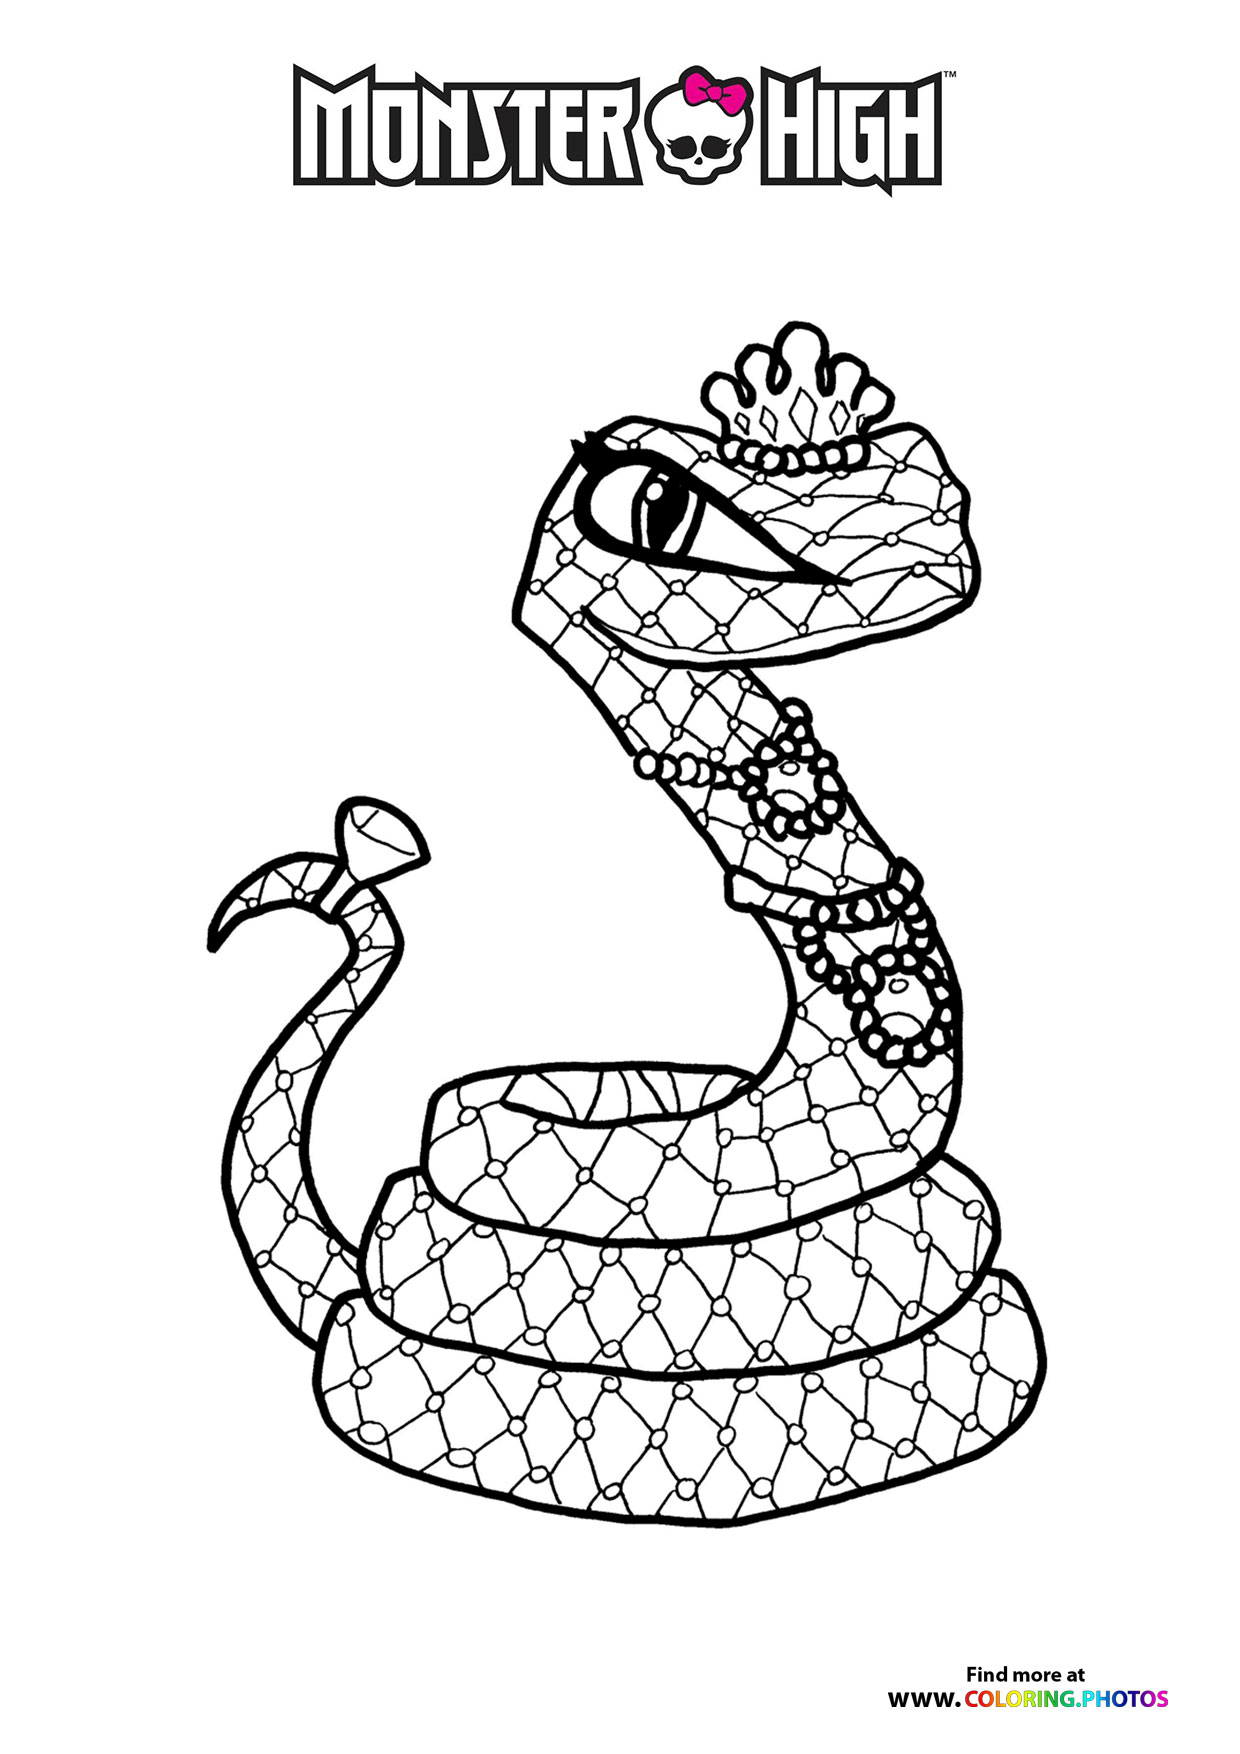 Раскраски змей распечатать. Змея раскраска. Раскраска змеи для детей. Змея раскраска для детей. Змея закракскаа.